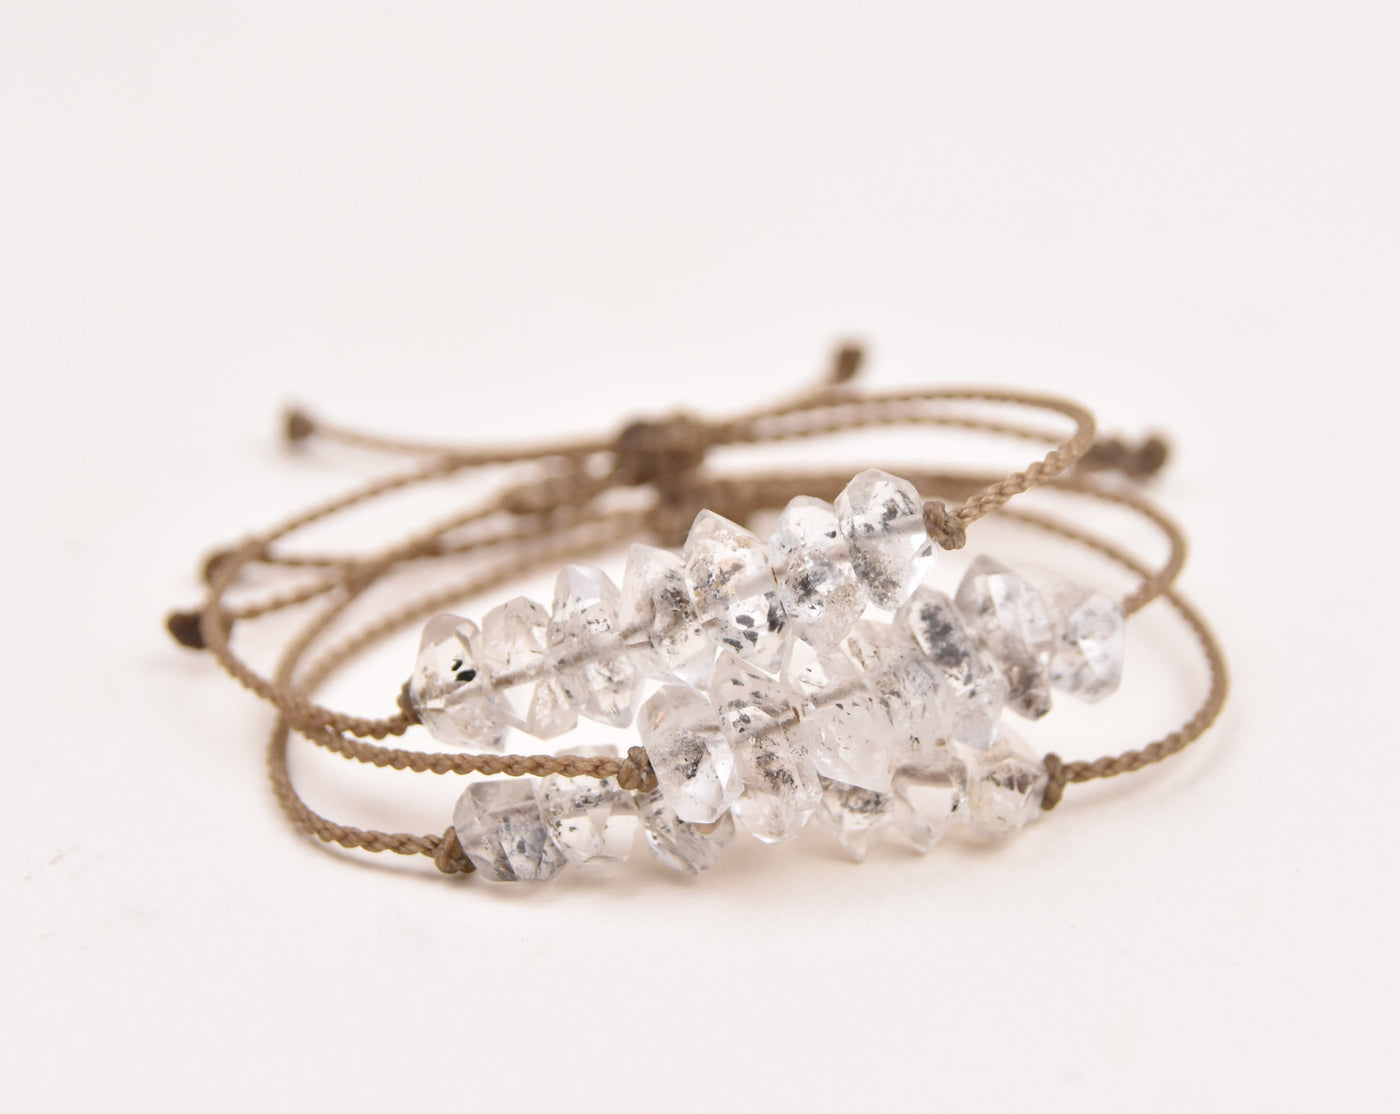 Herkimer Diamond Drop - Earrings, Bracelets + a Necklace! All Limited.